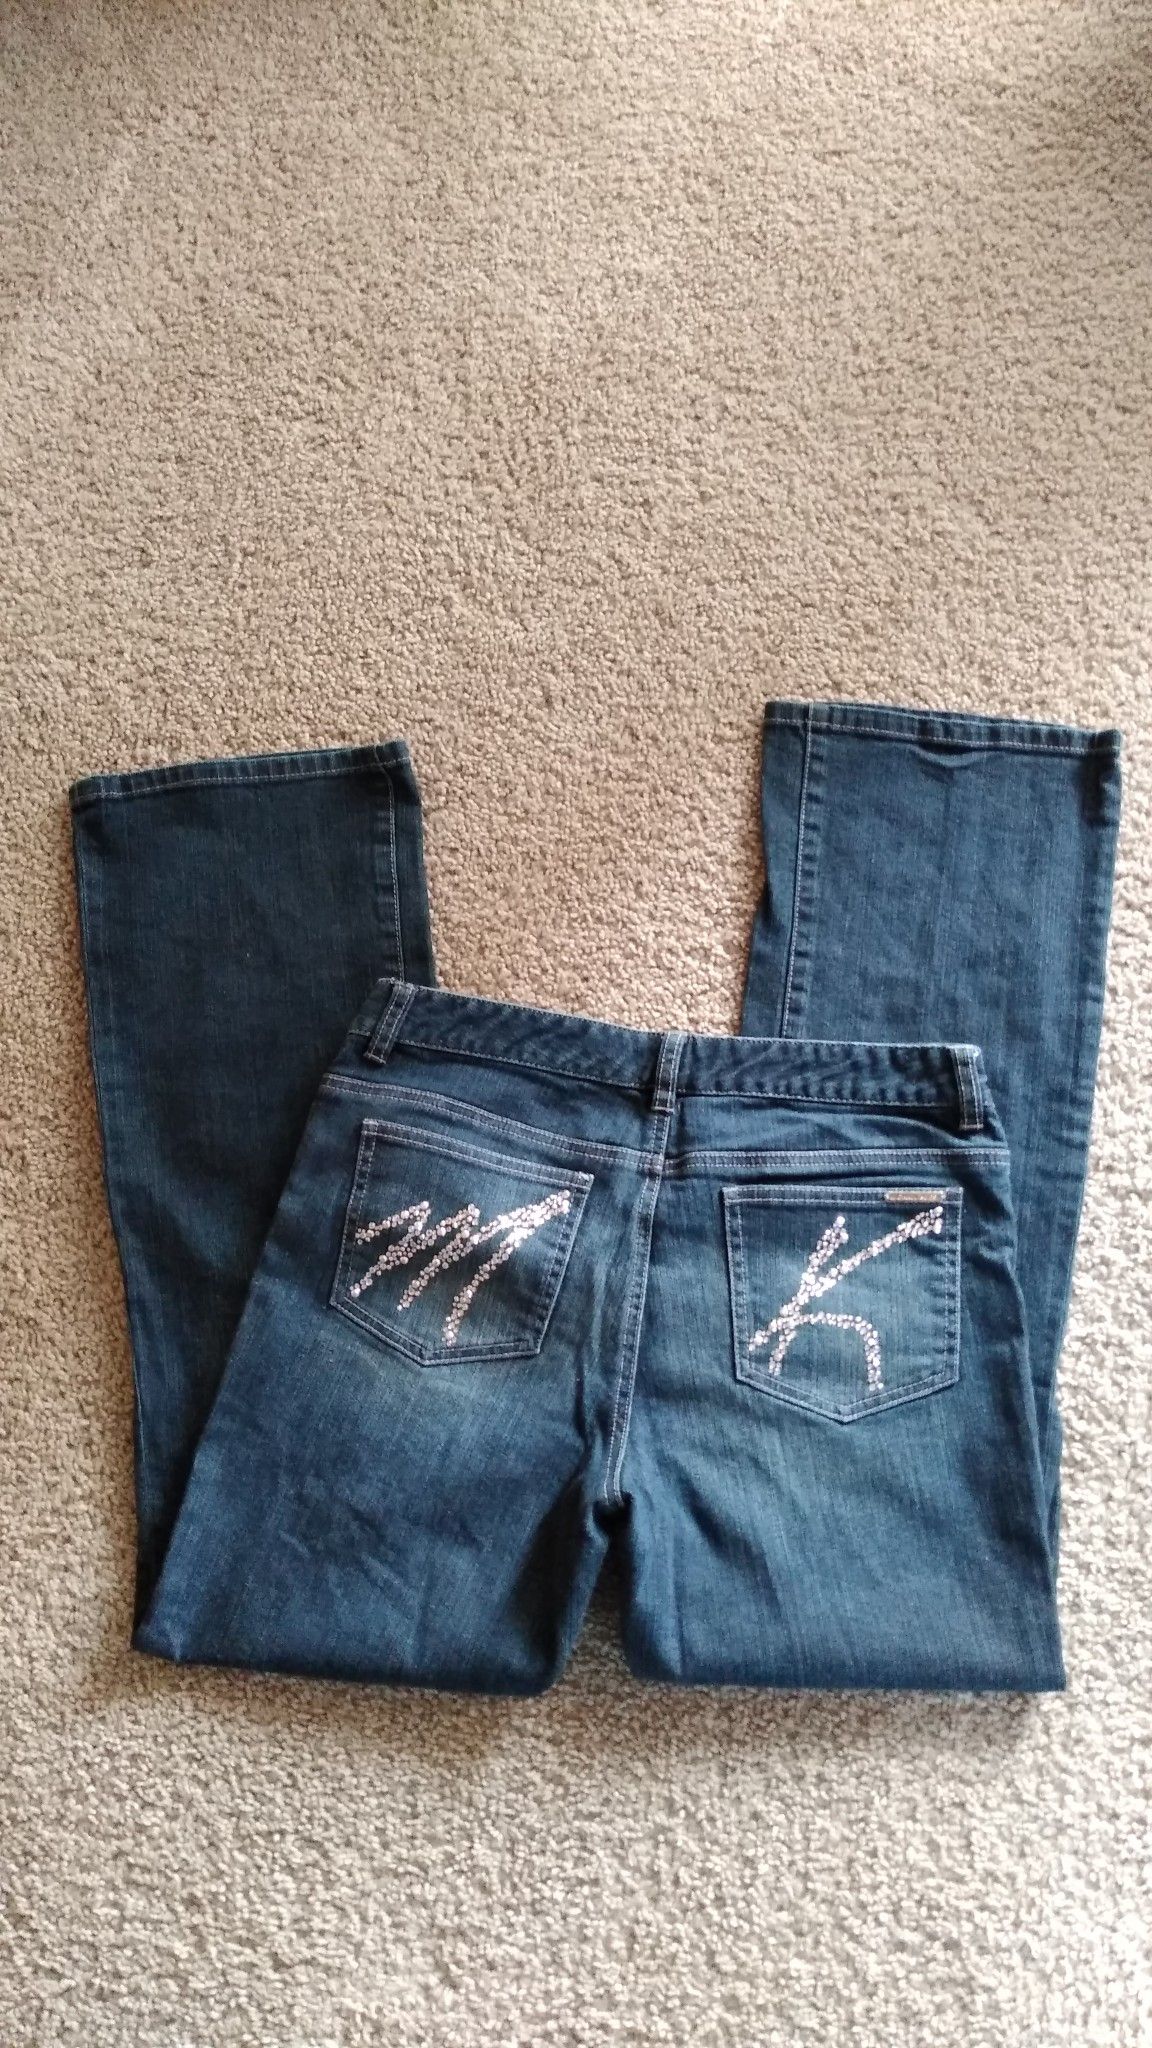 Brand New Beautiful Michael Kors Jeans , women's Size 8p ( never worn )